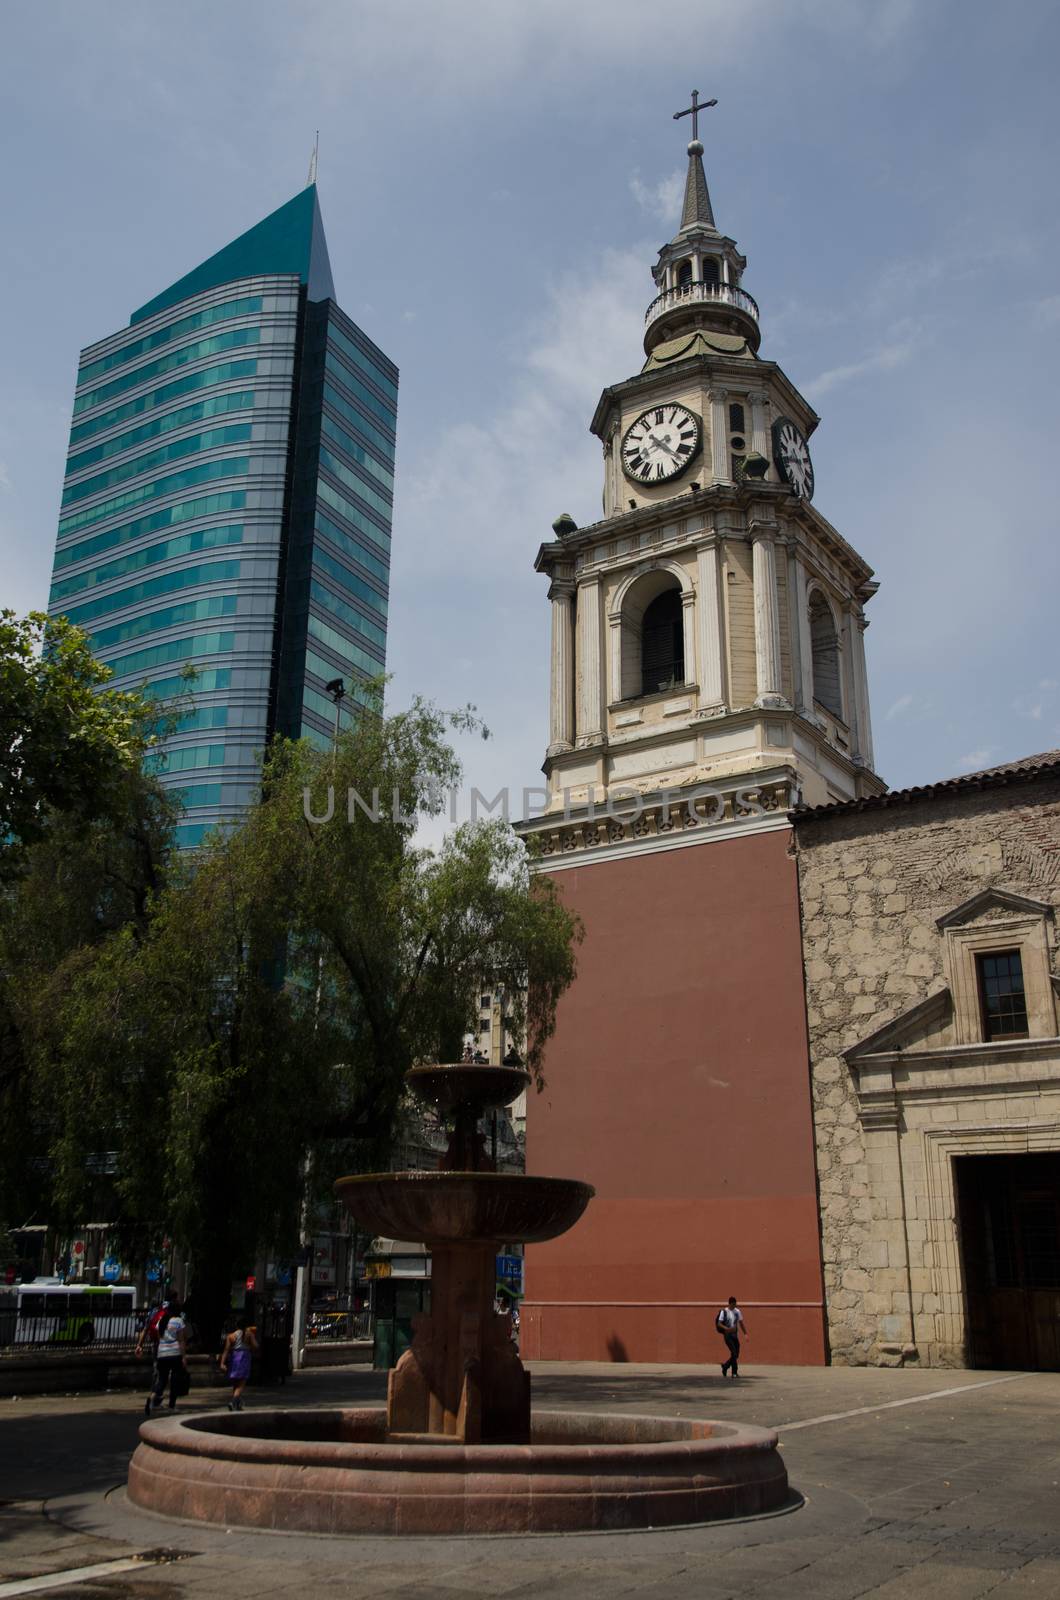 San Francisco Church and skyscraper in Santiago de Chile. by VictorSuarez